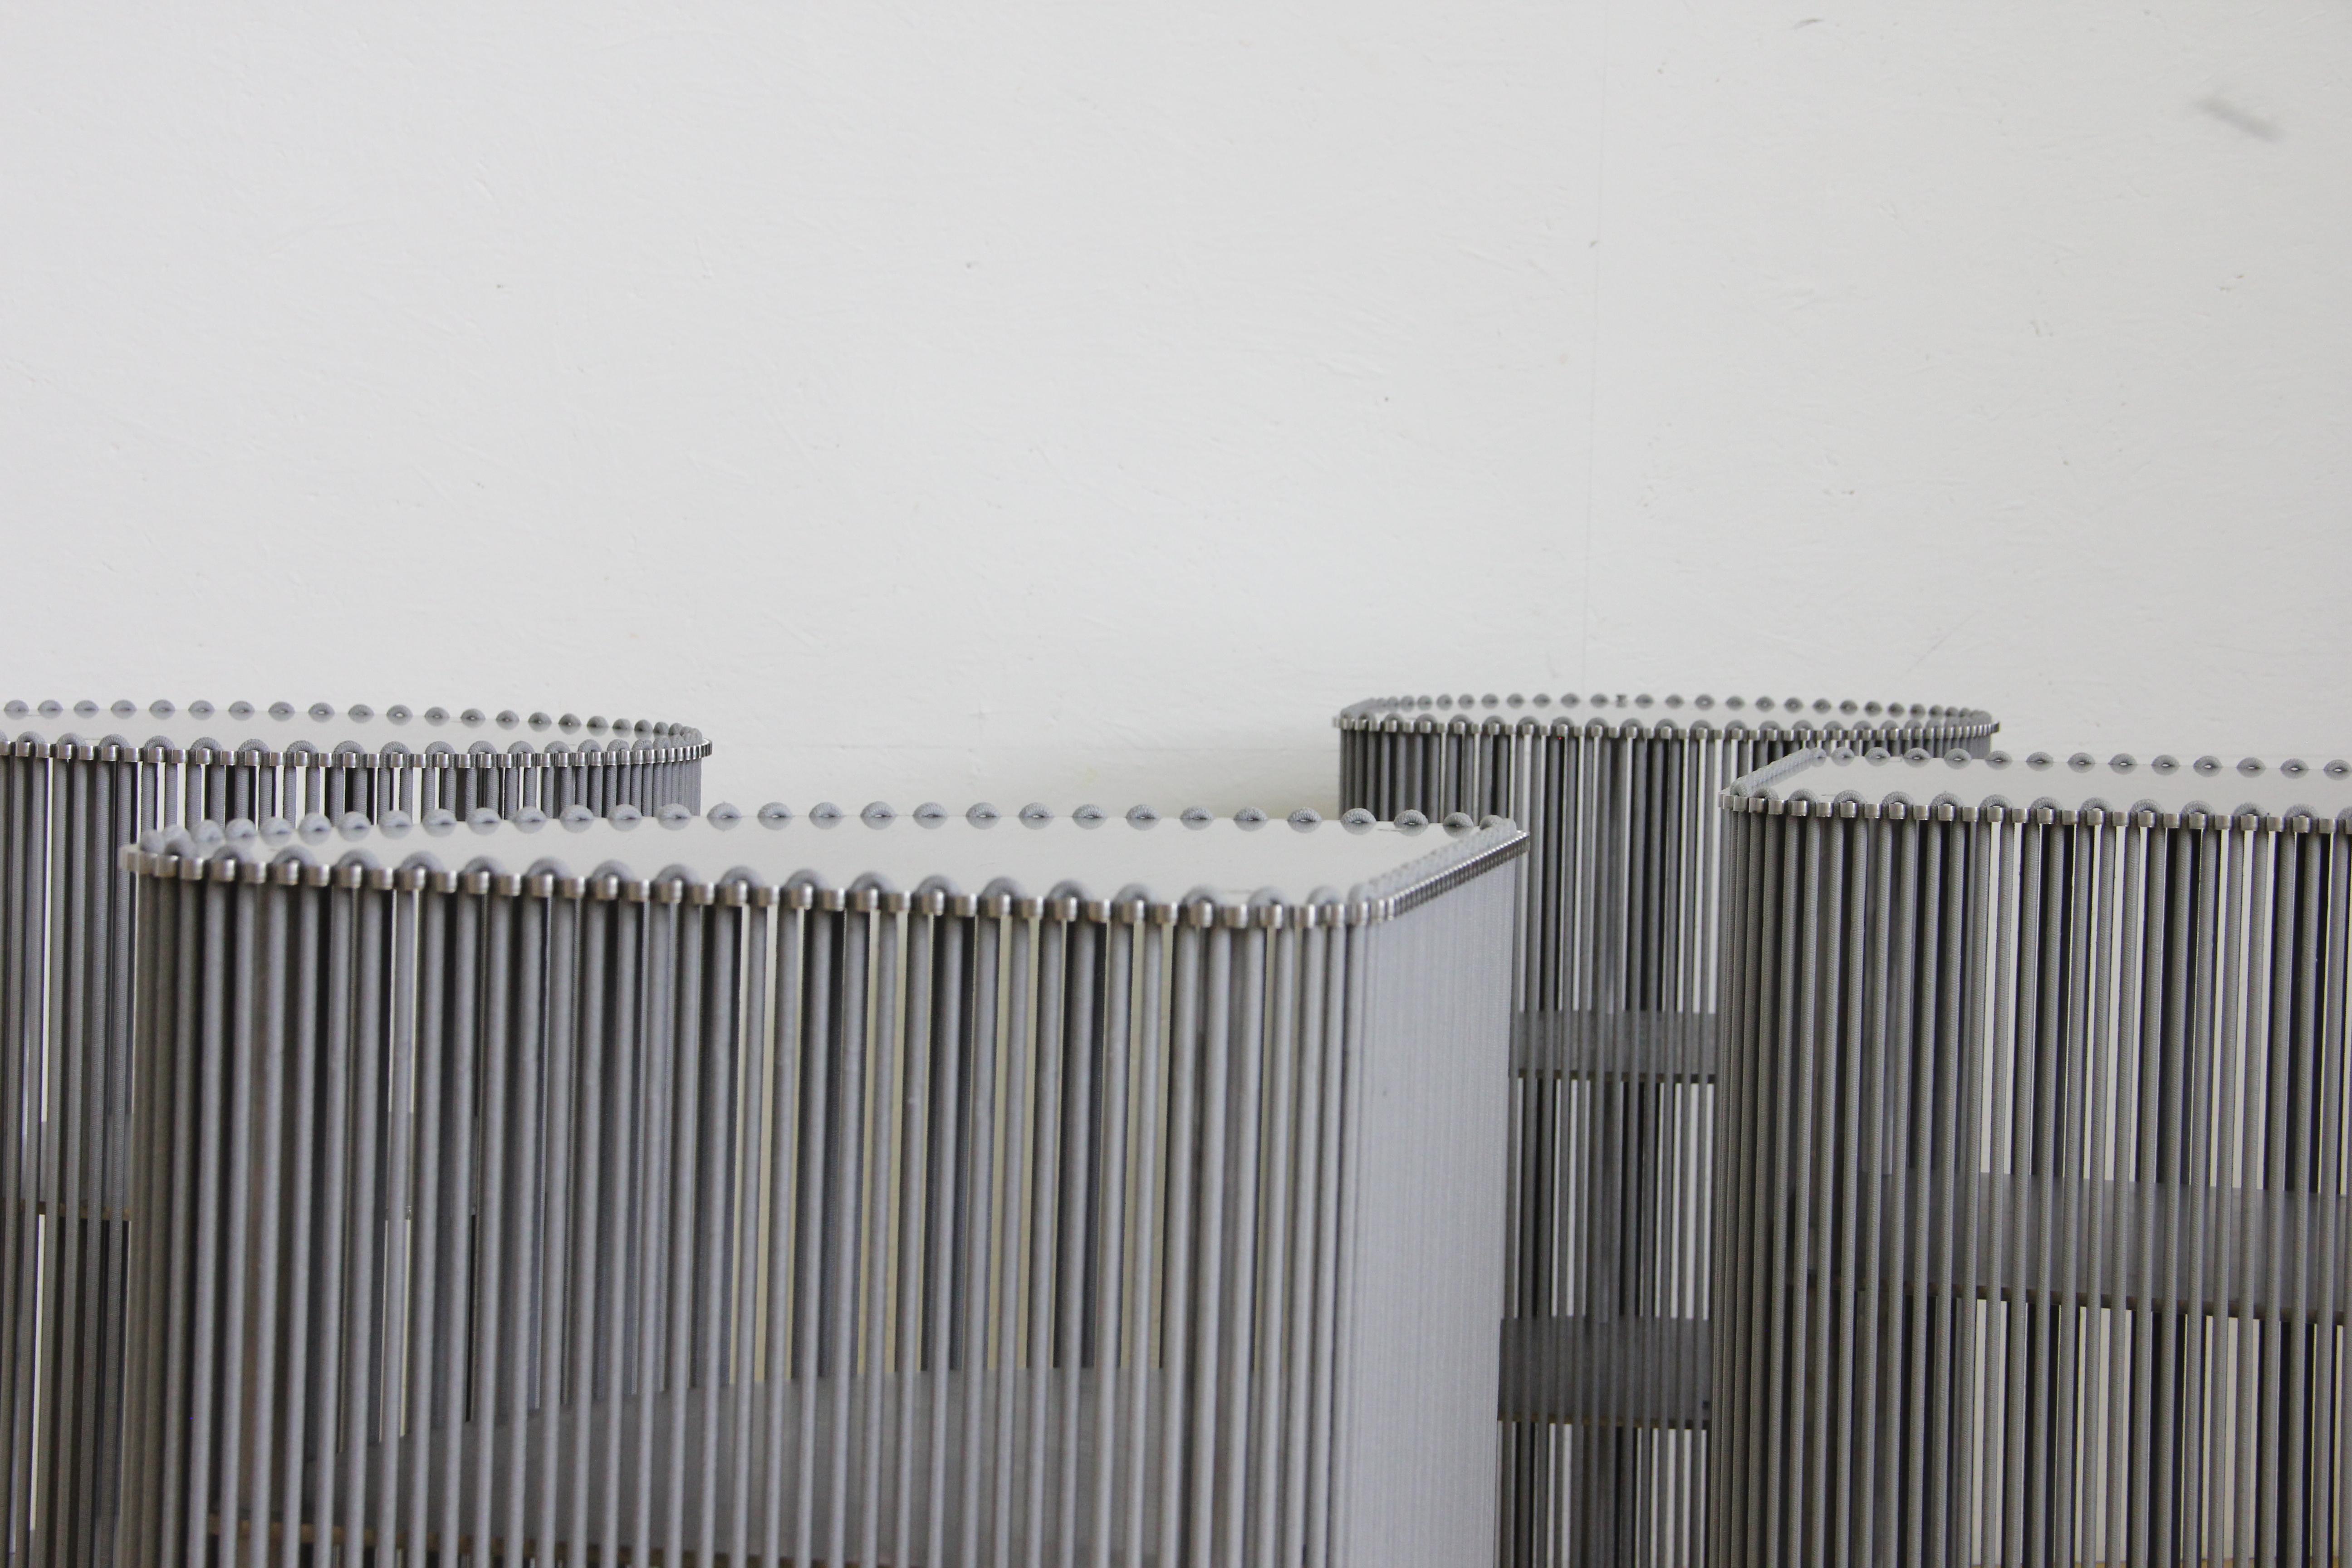 Aluminum Coil #3 Cabinet Wall Mounted by Bram Kerkhofs